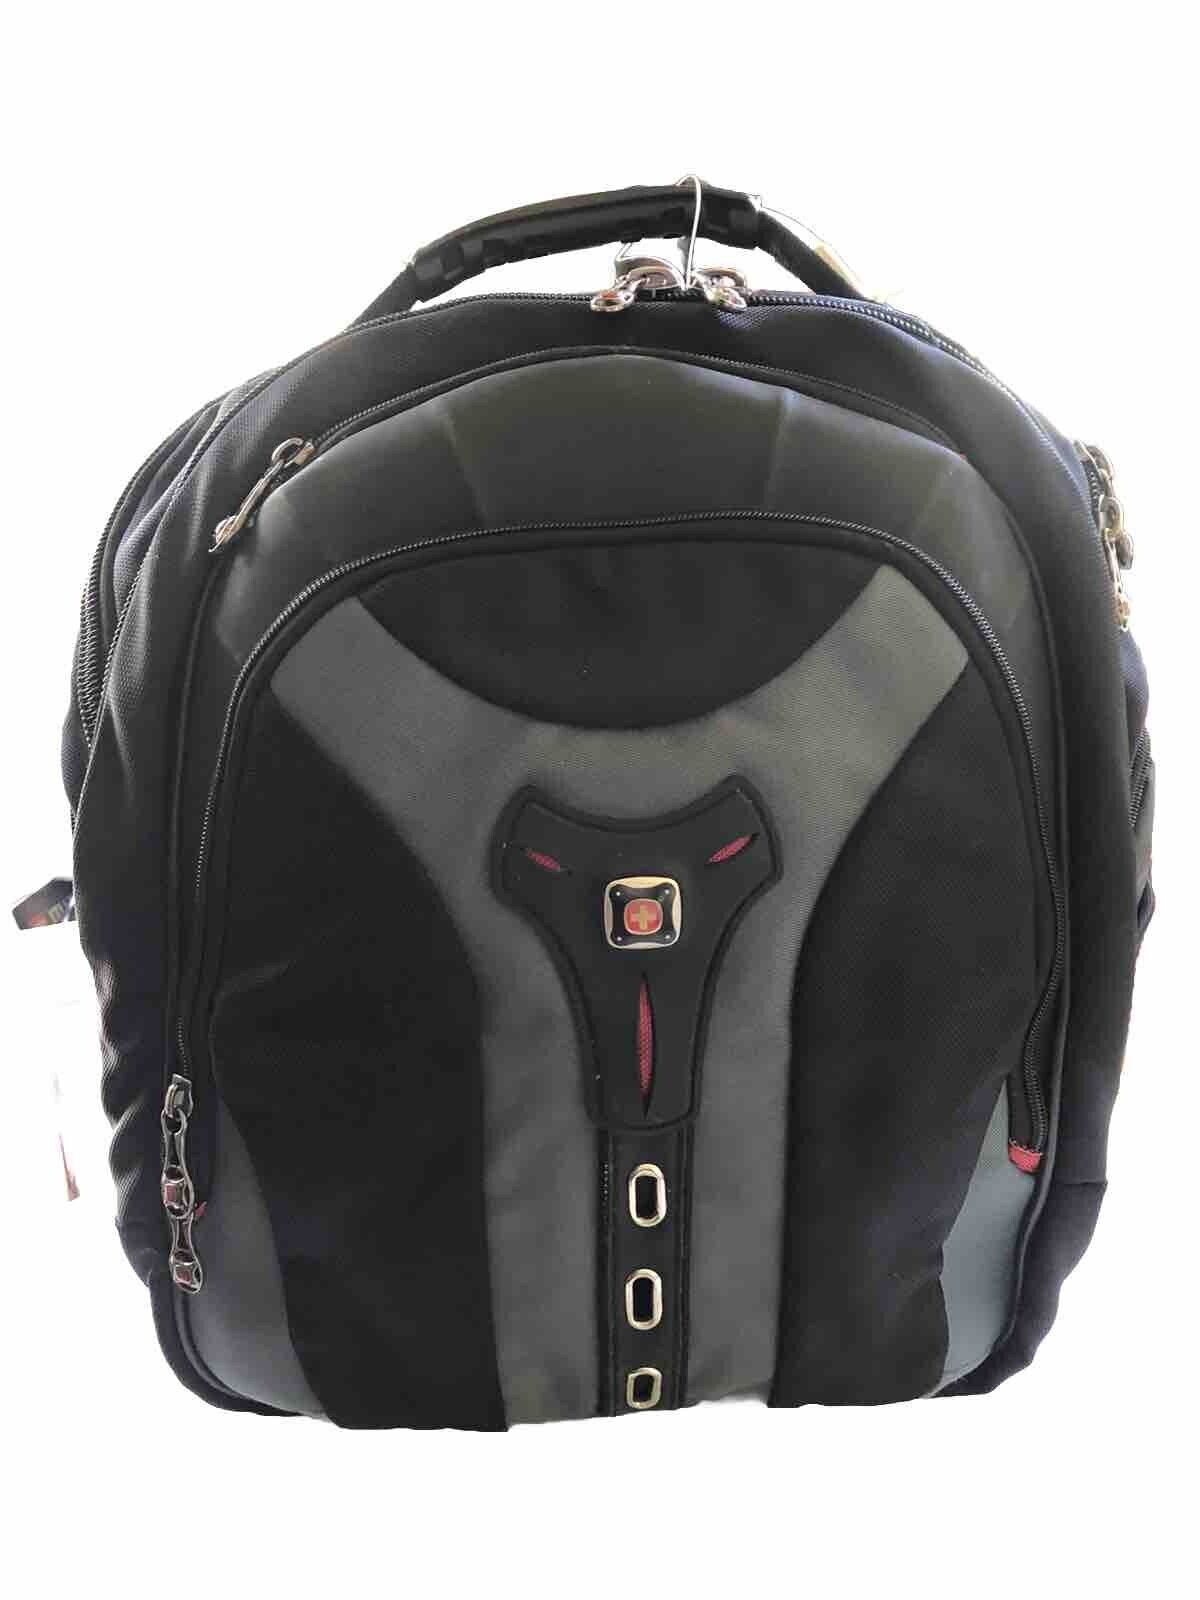 Swiss Gear Wenger Airflow ScanSmart 17” Laptop Backpack Black  EUC